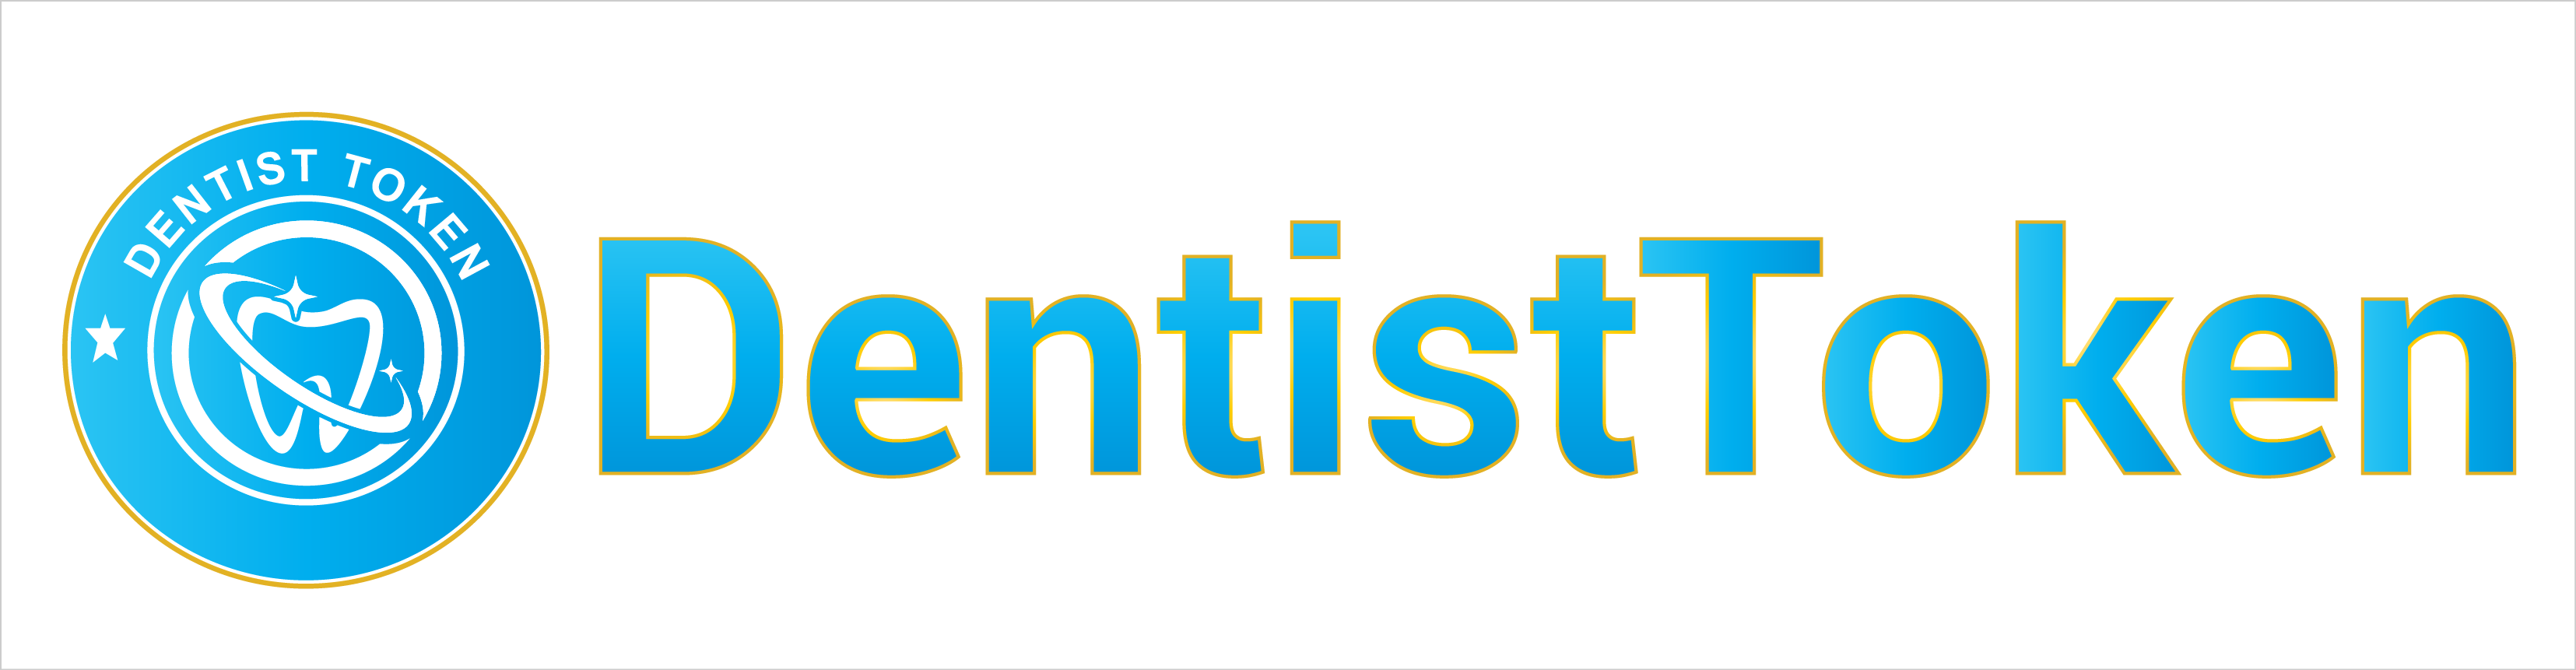 dentist token logo